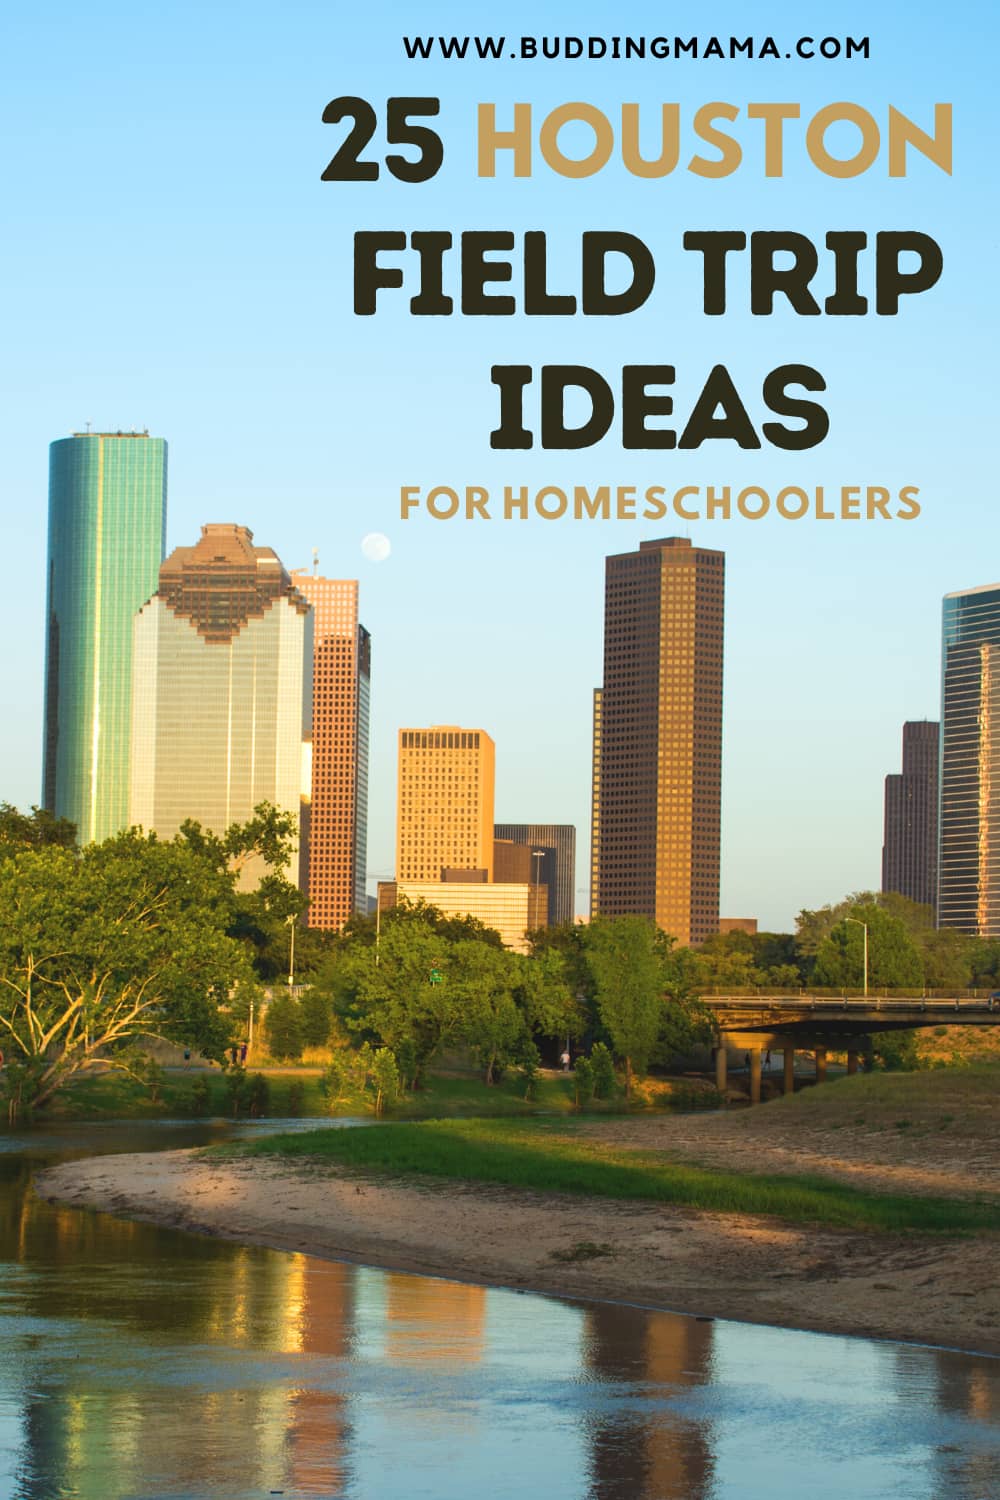 Educational Field Trip Ideas for Homeschoolers Houston Budding Mama